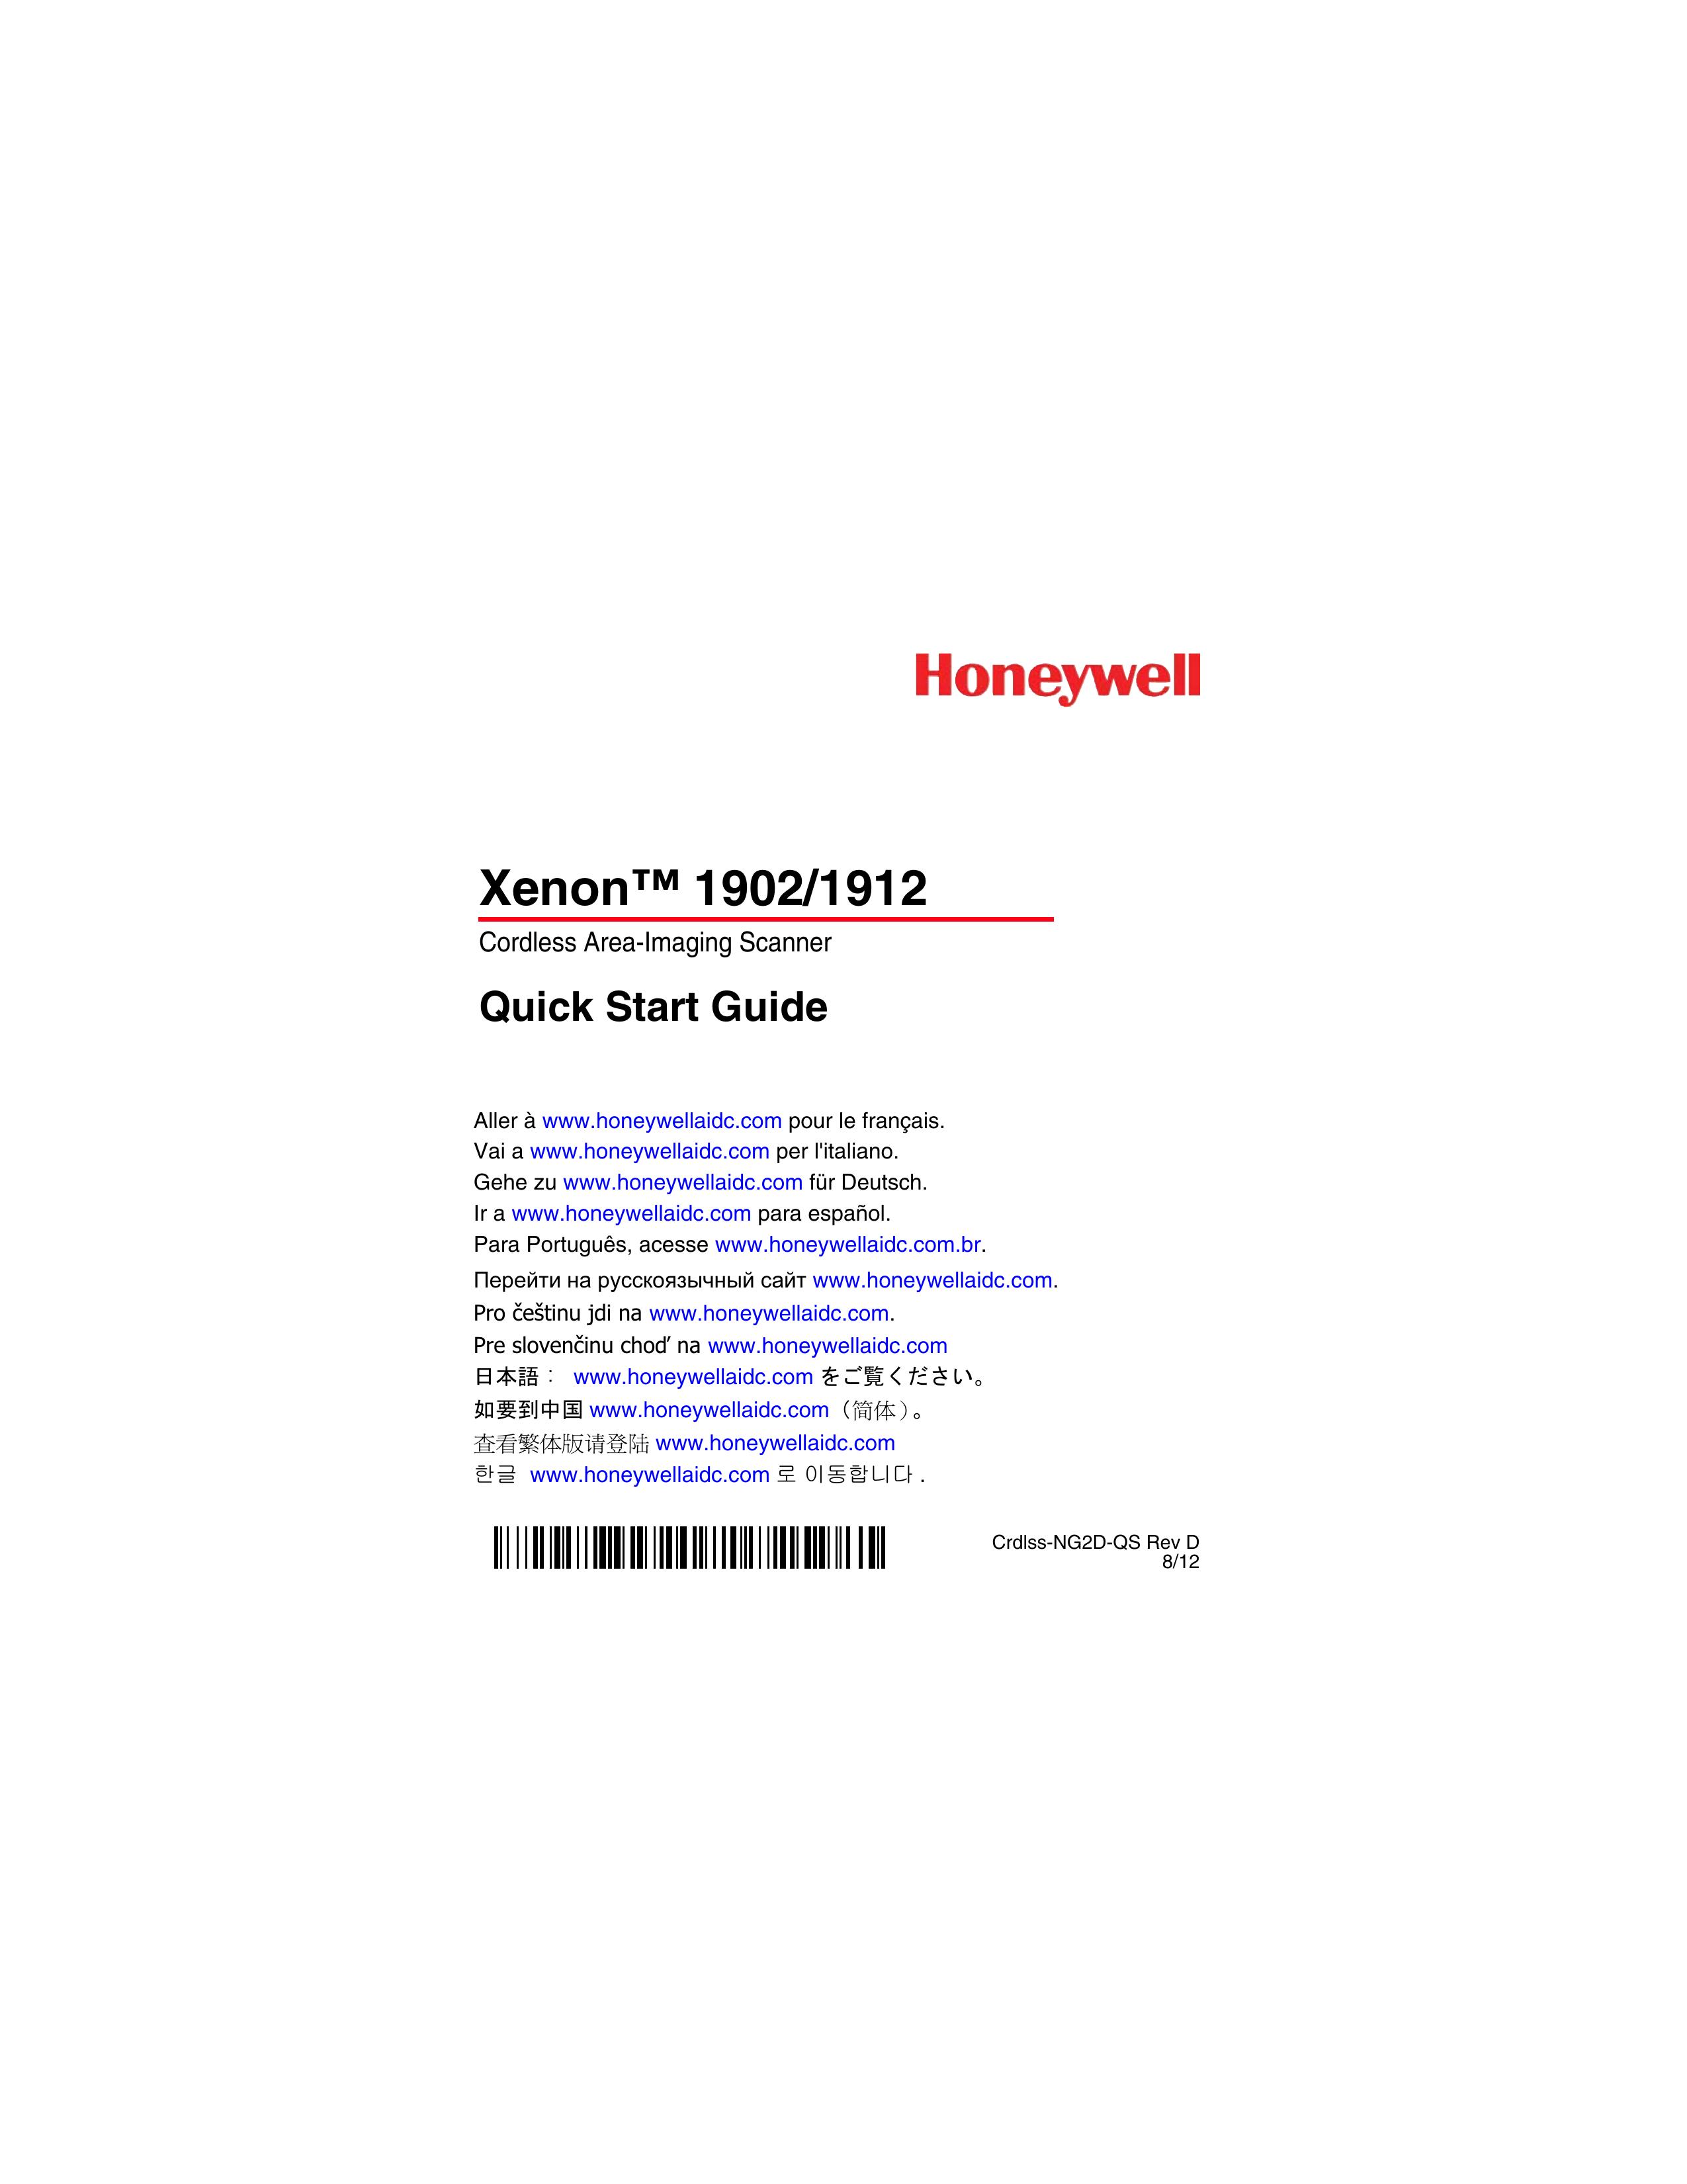 Honeywell 1902/1912 Photo Scanner User Manual